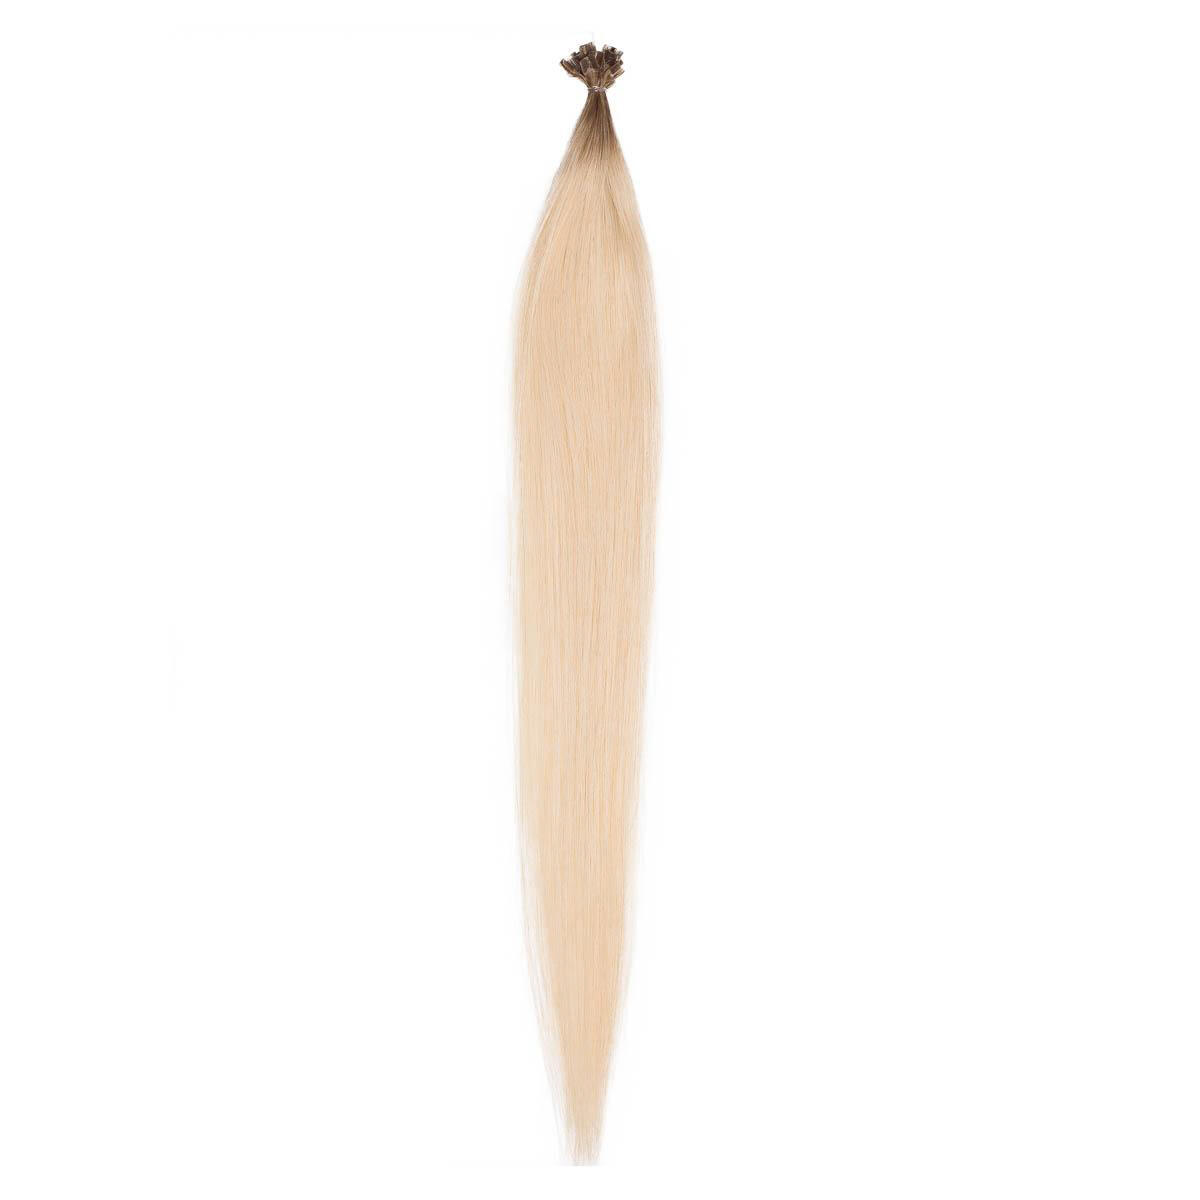 Nail Hair Original R7.3/8.0 Cendre Golden Blonde Root 50 cm